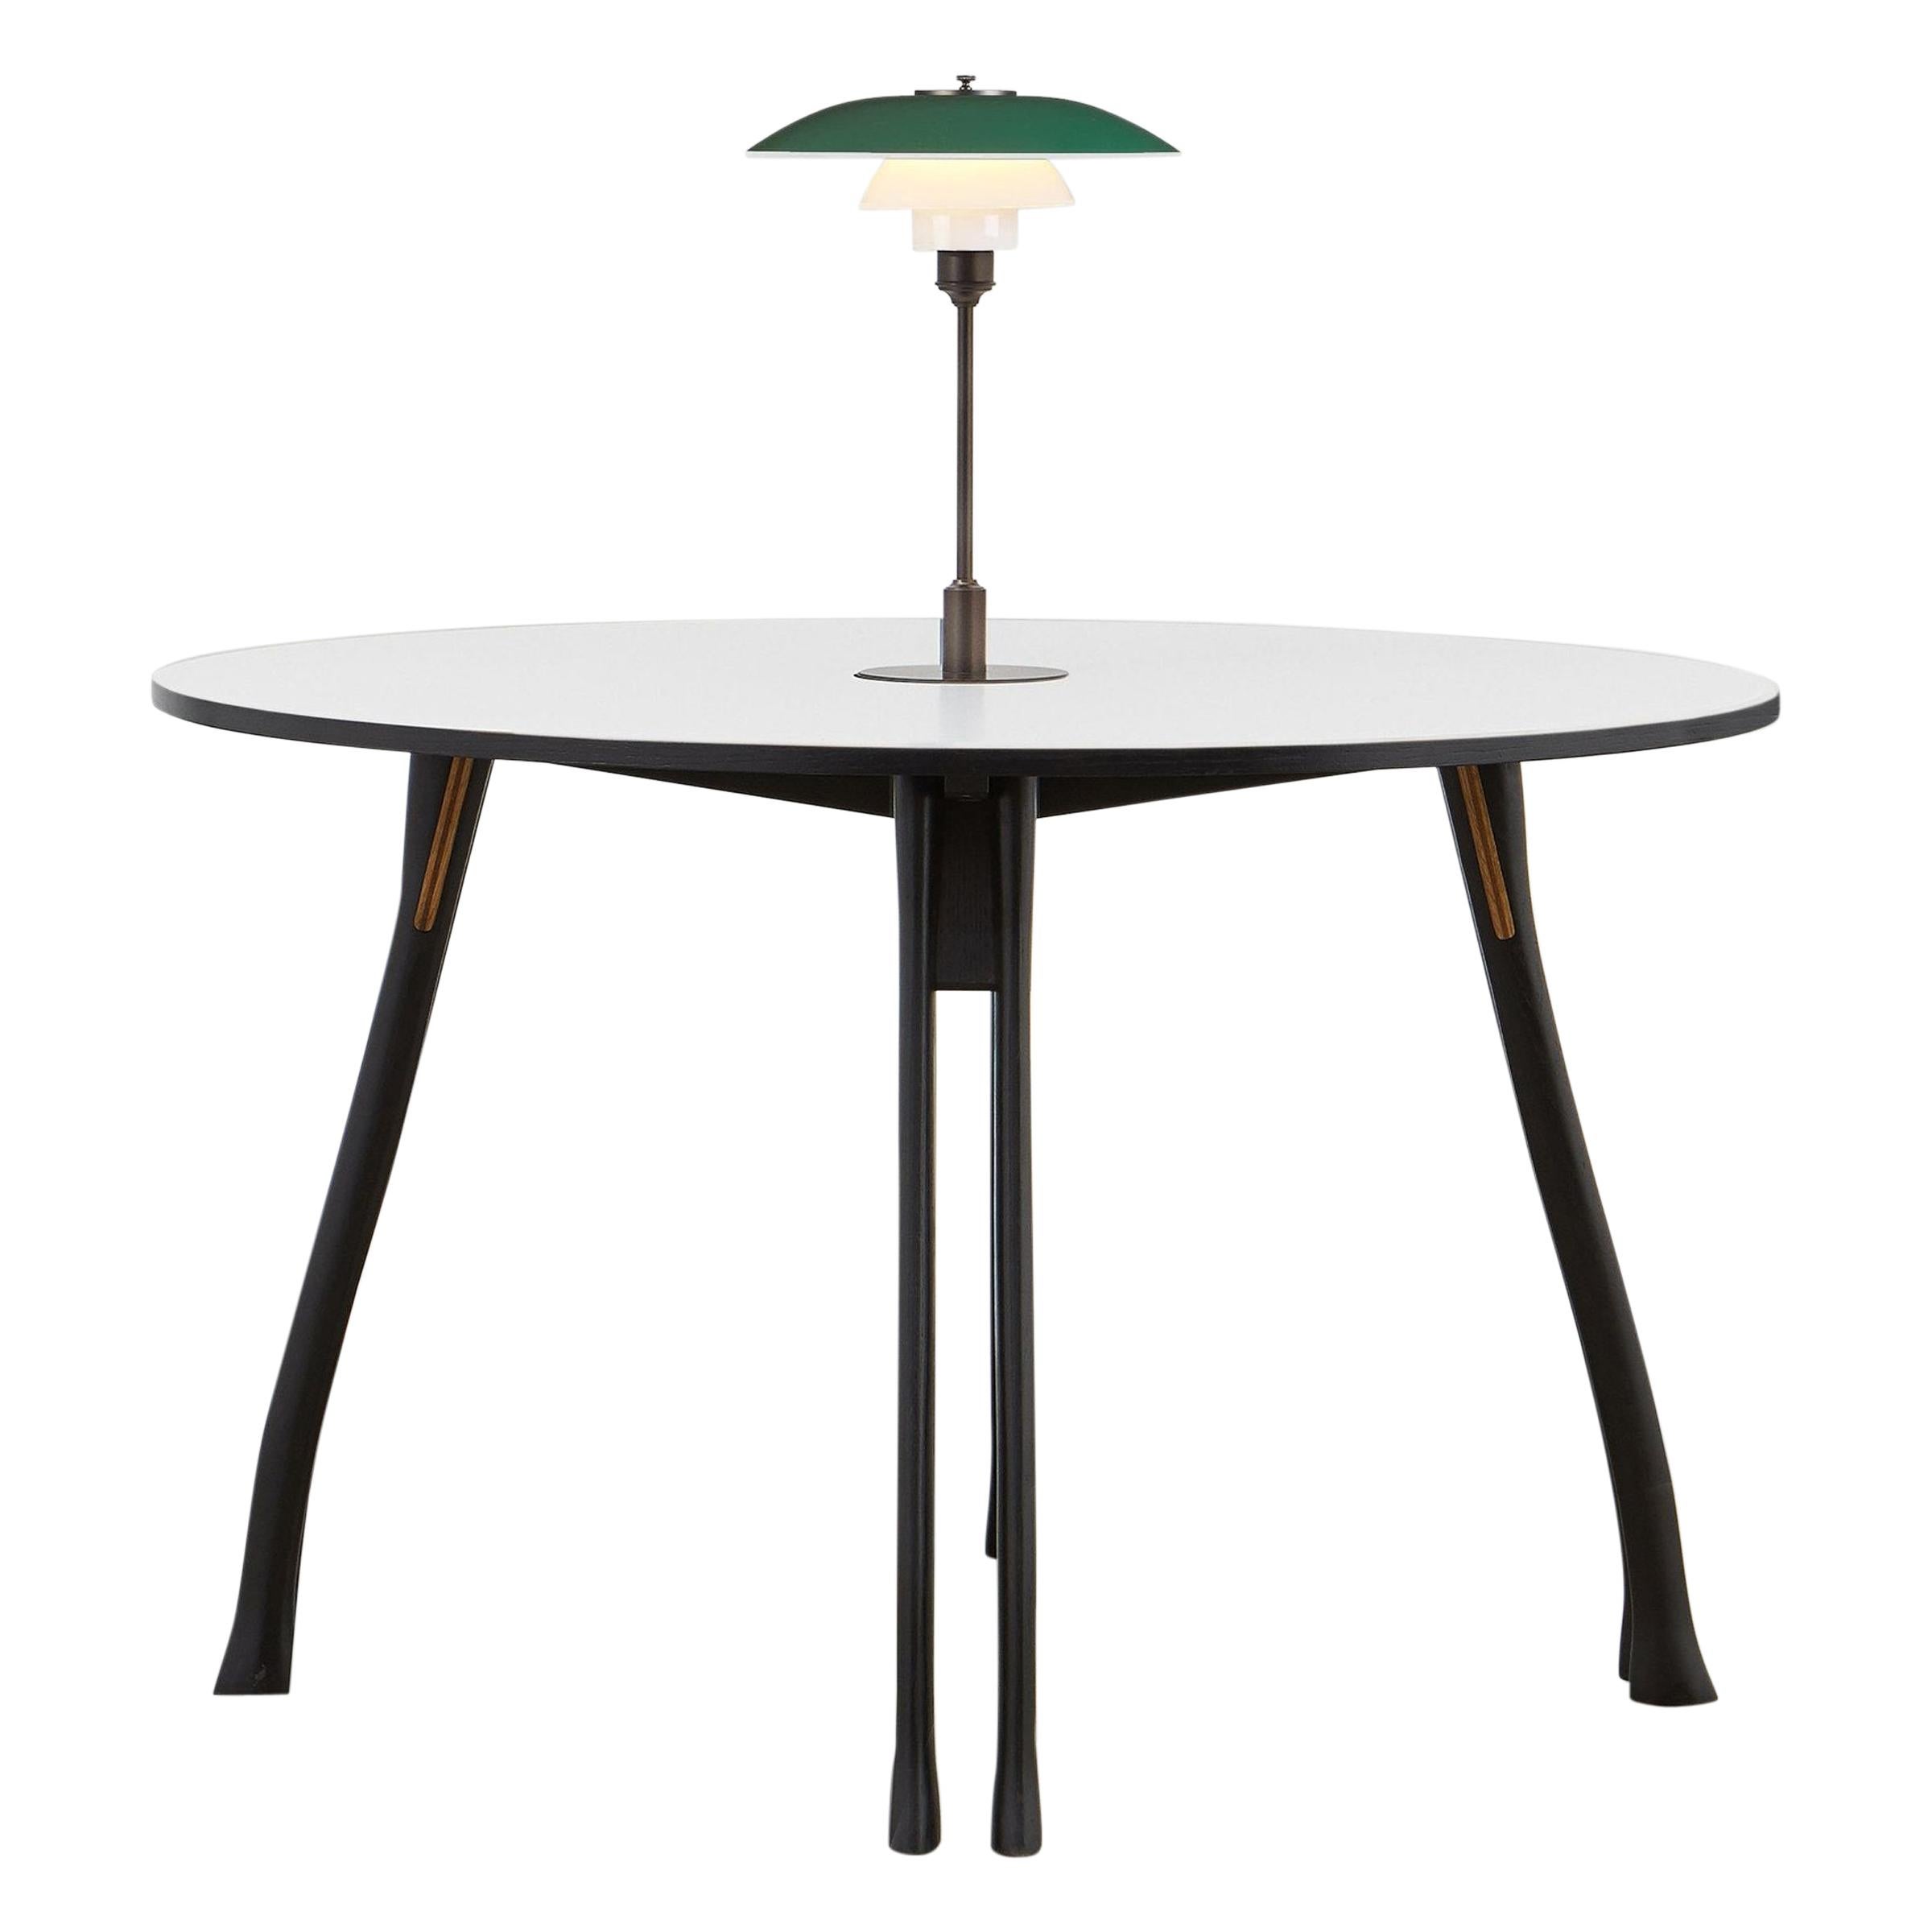 PH Axe Table, black oak legs, laminated plate, green PH 3 ½ - 2 ½ lamp